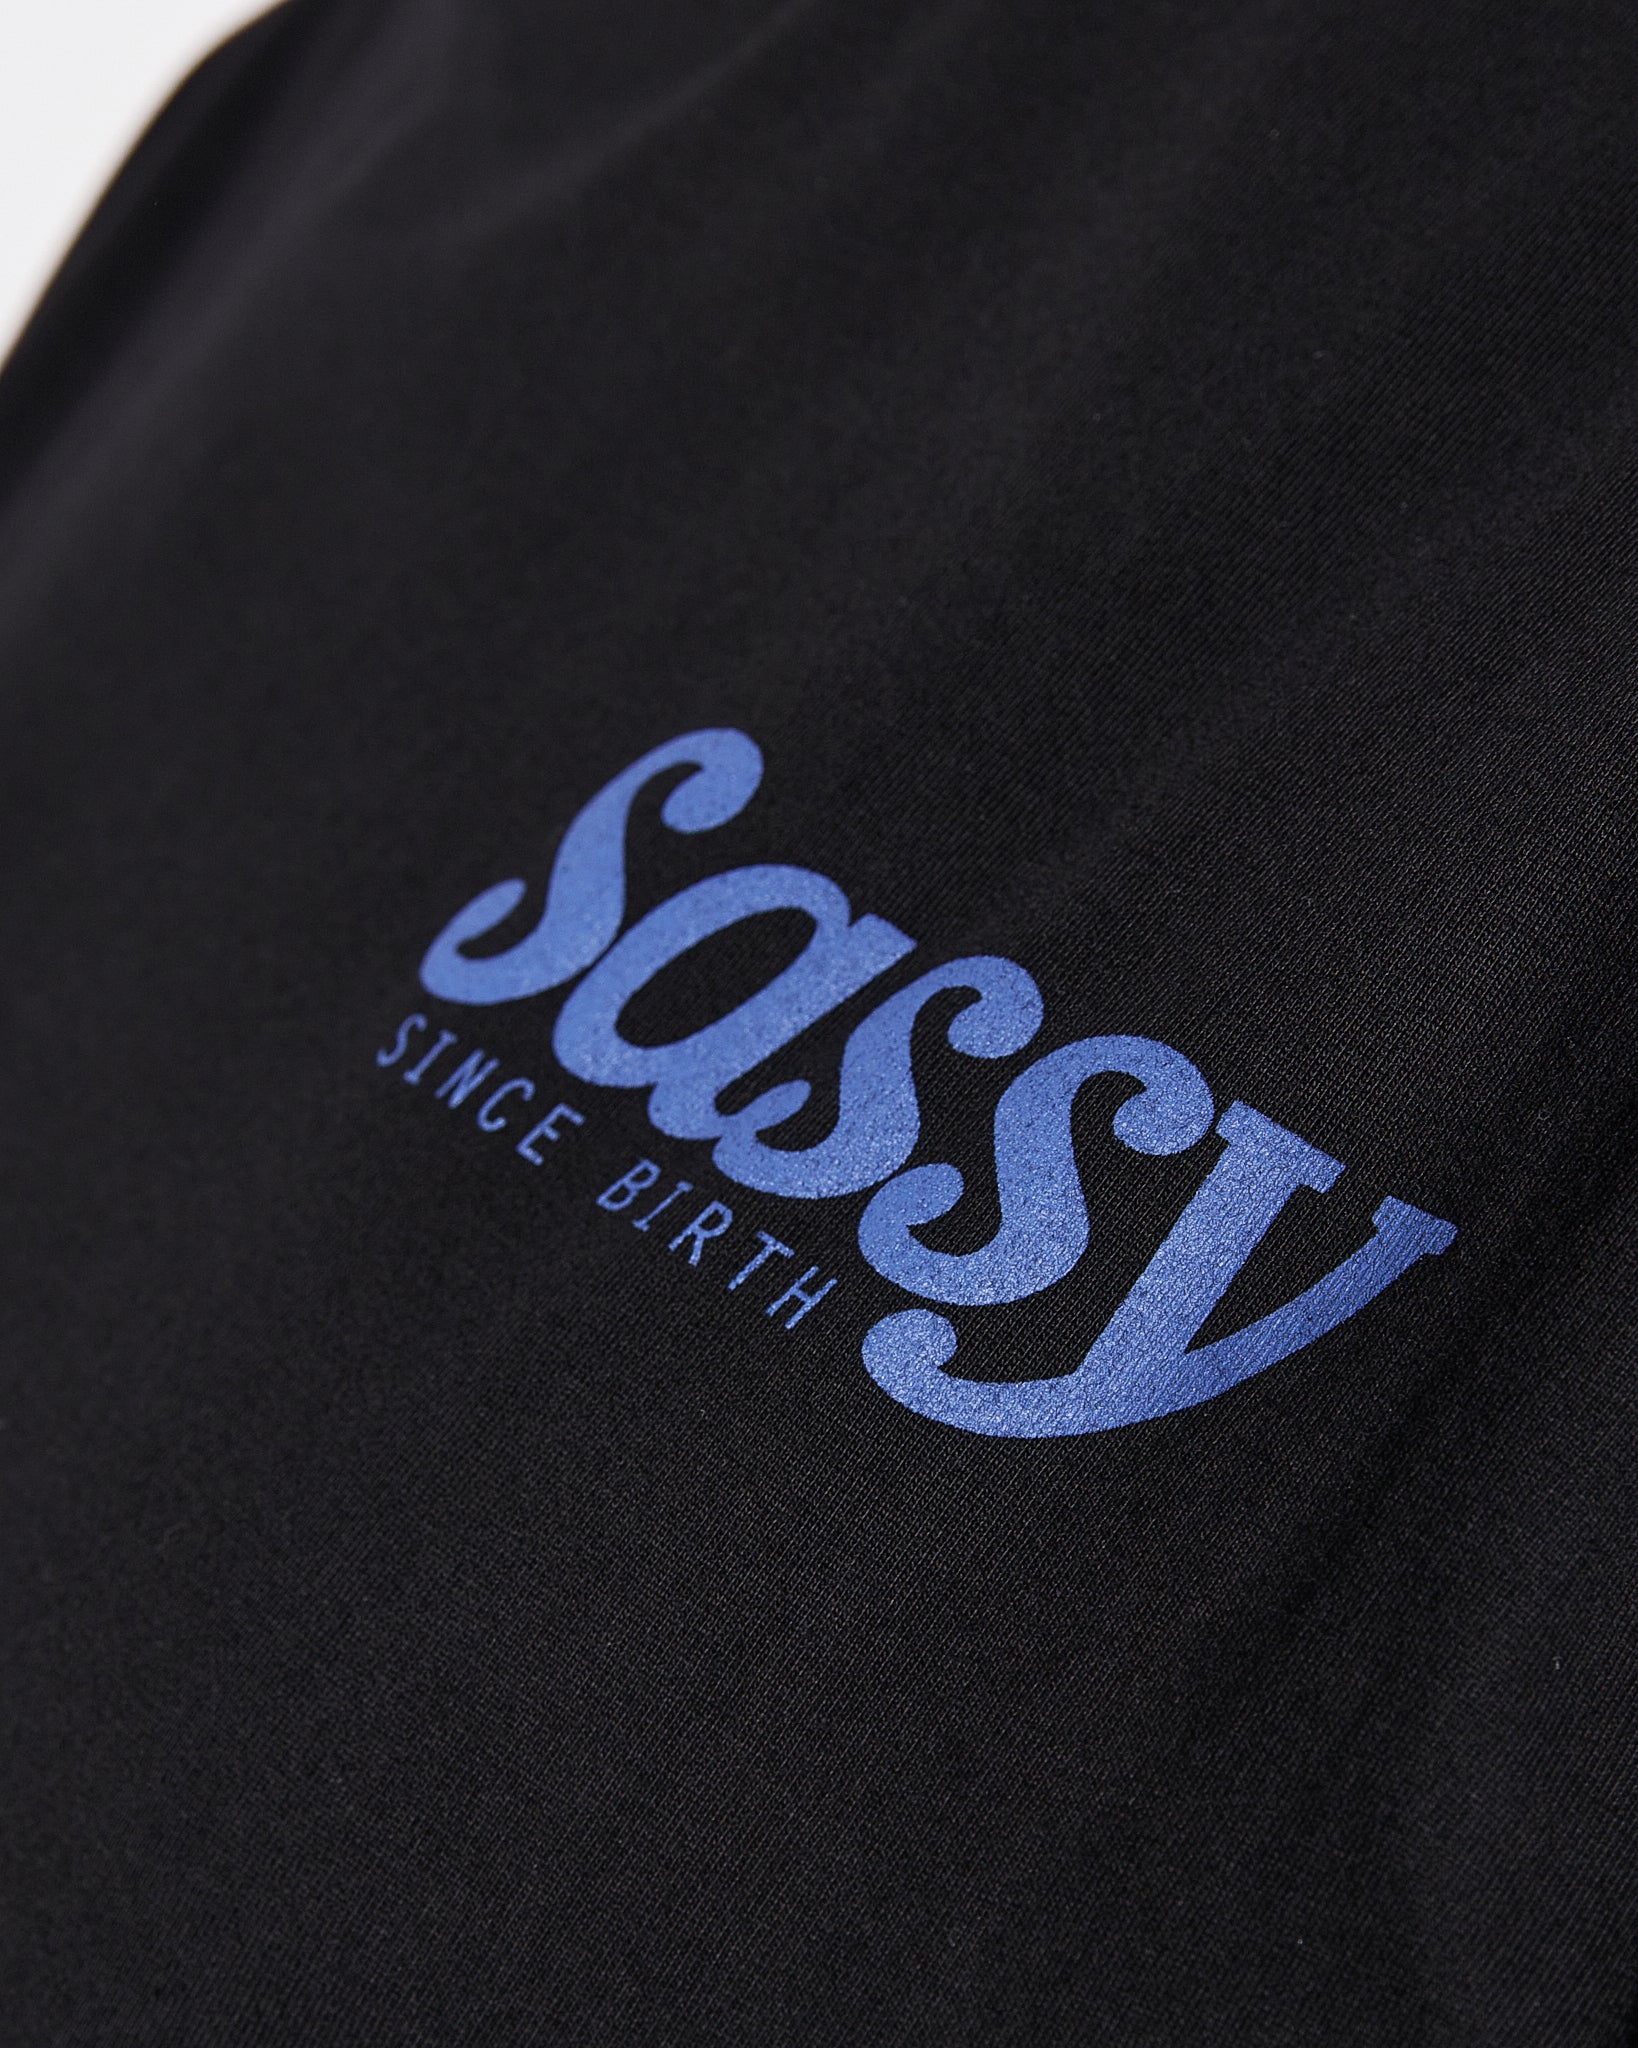 Sassy Lady Black T-Shirt Crop Top 9.90